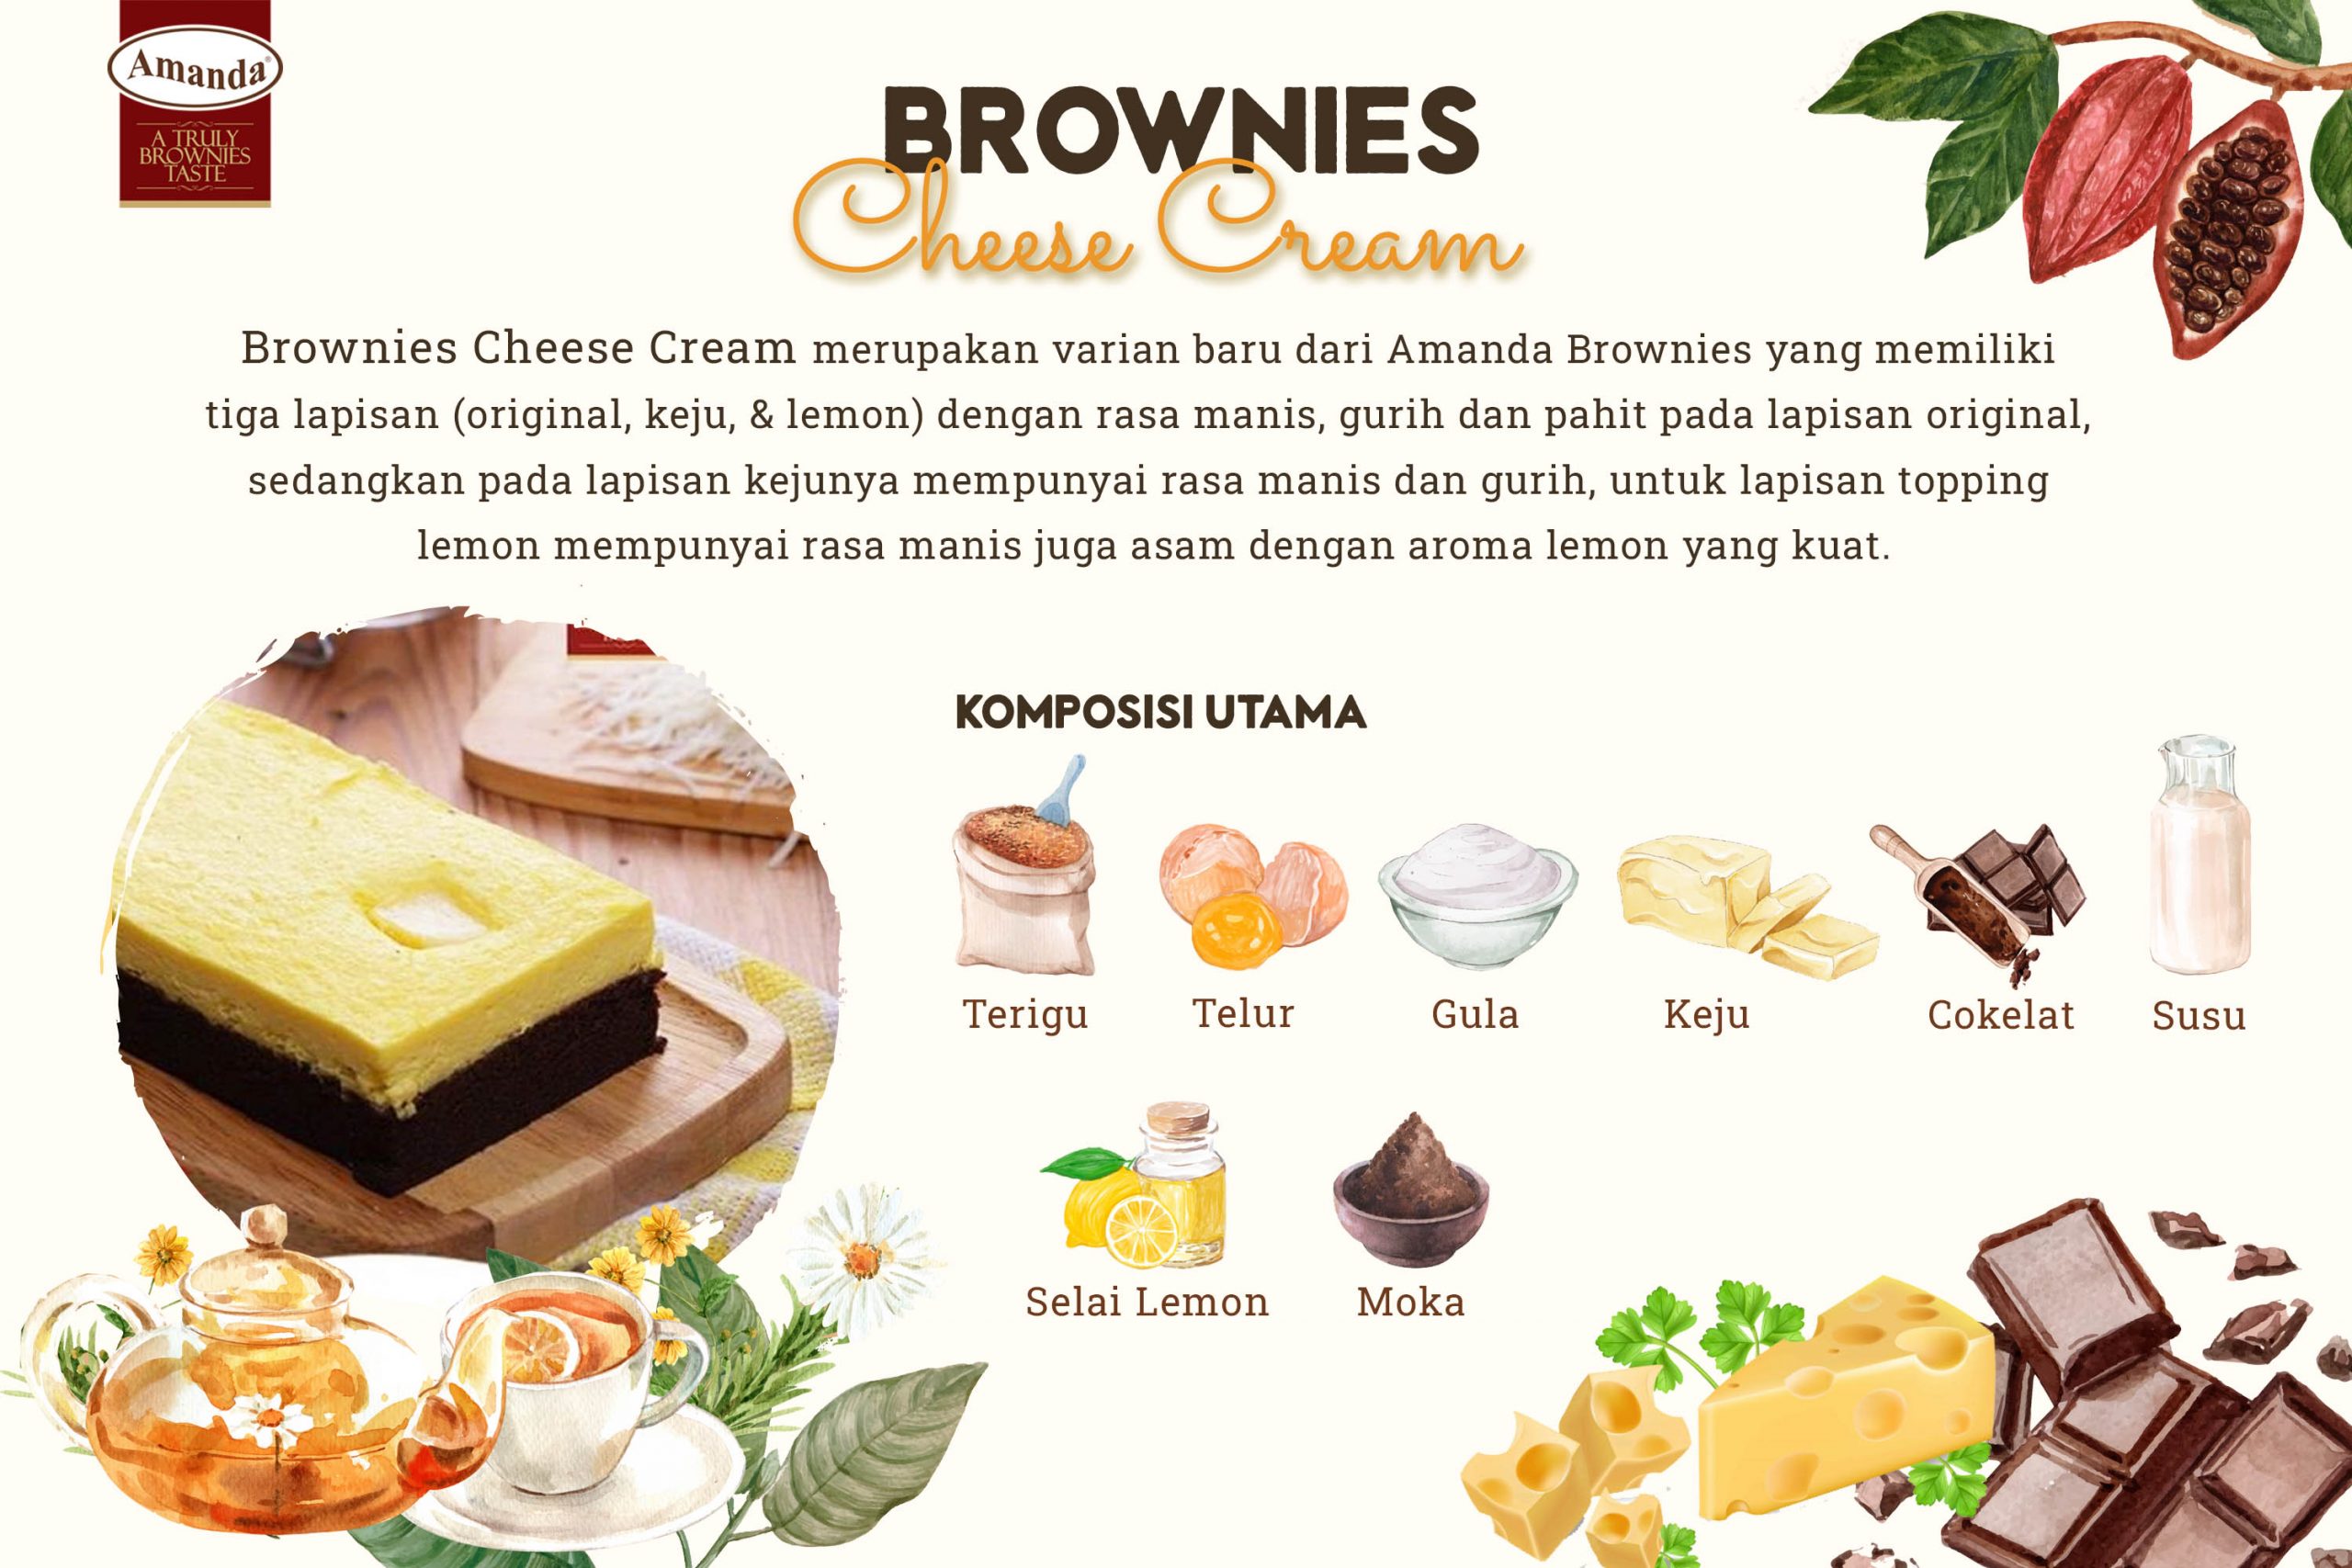 Brownies перевод на русский